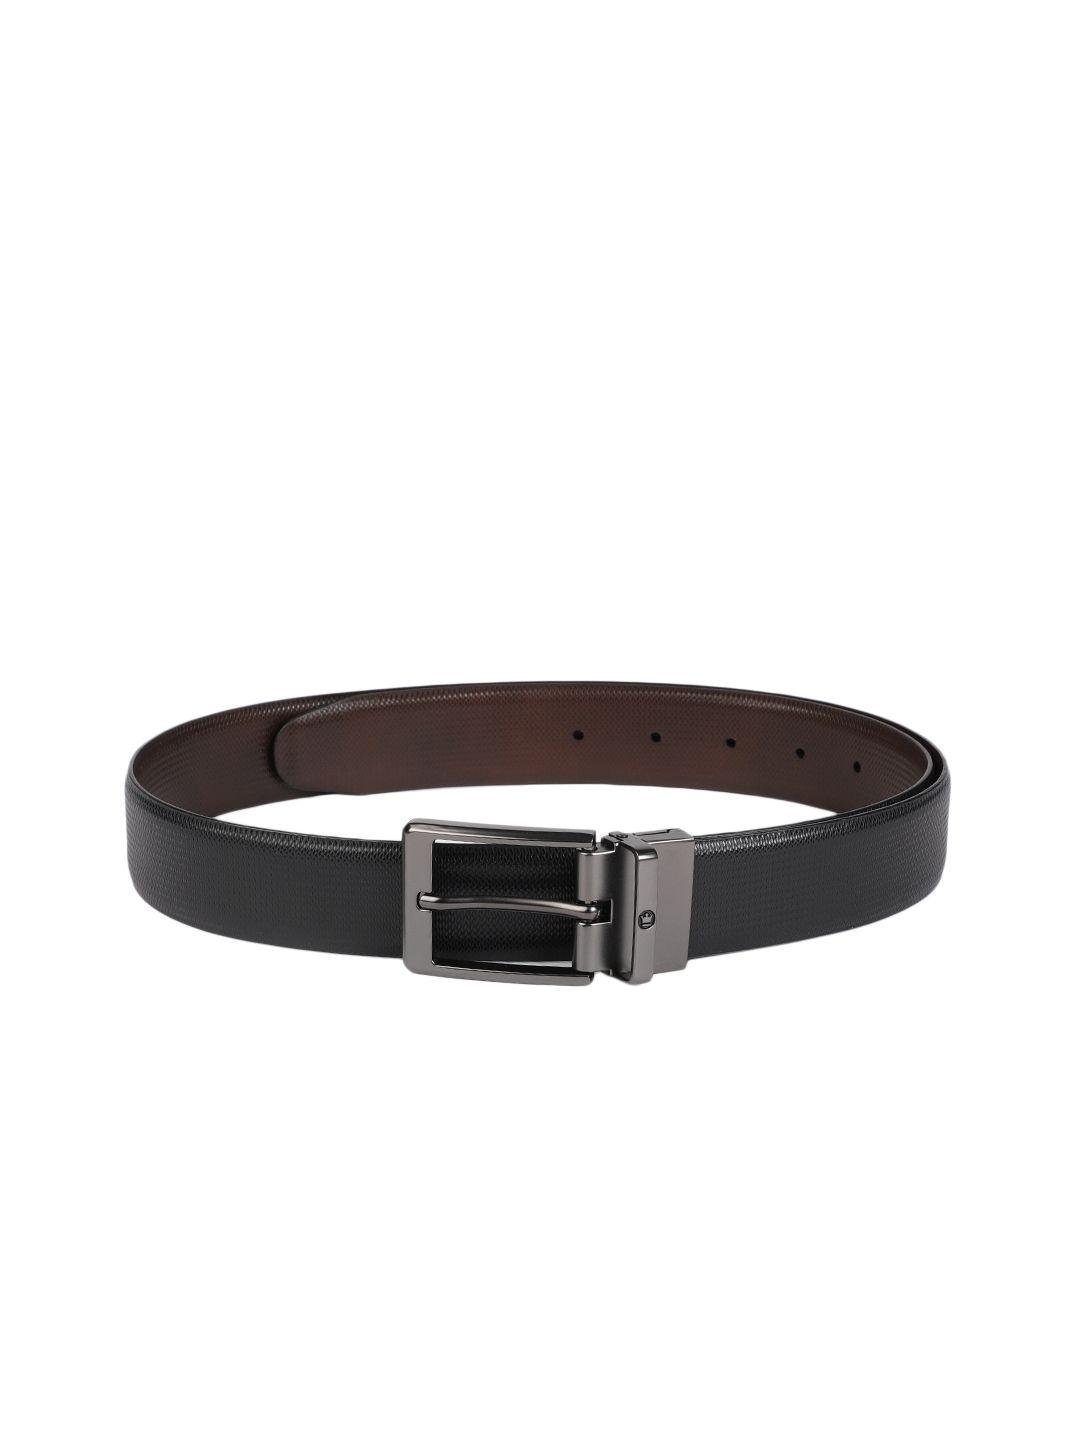 louis-philippe-men-black-&-brown-reversible-leather-belt